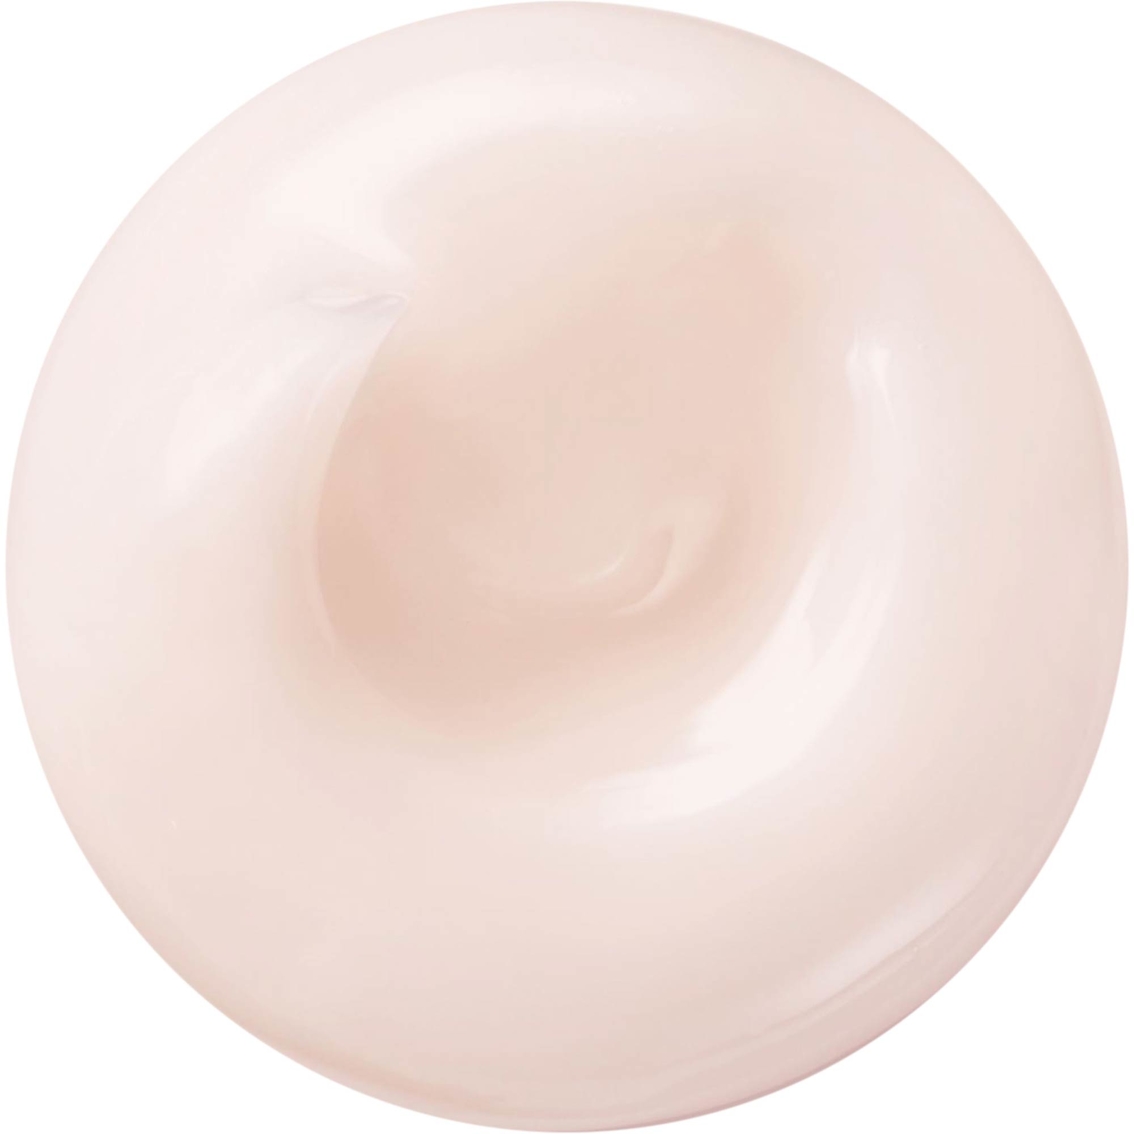 Shiseido White Lucent Brightening Gel Cream - Image 3 of 3